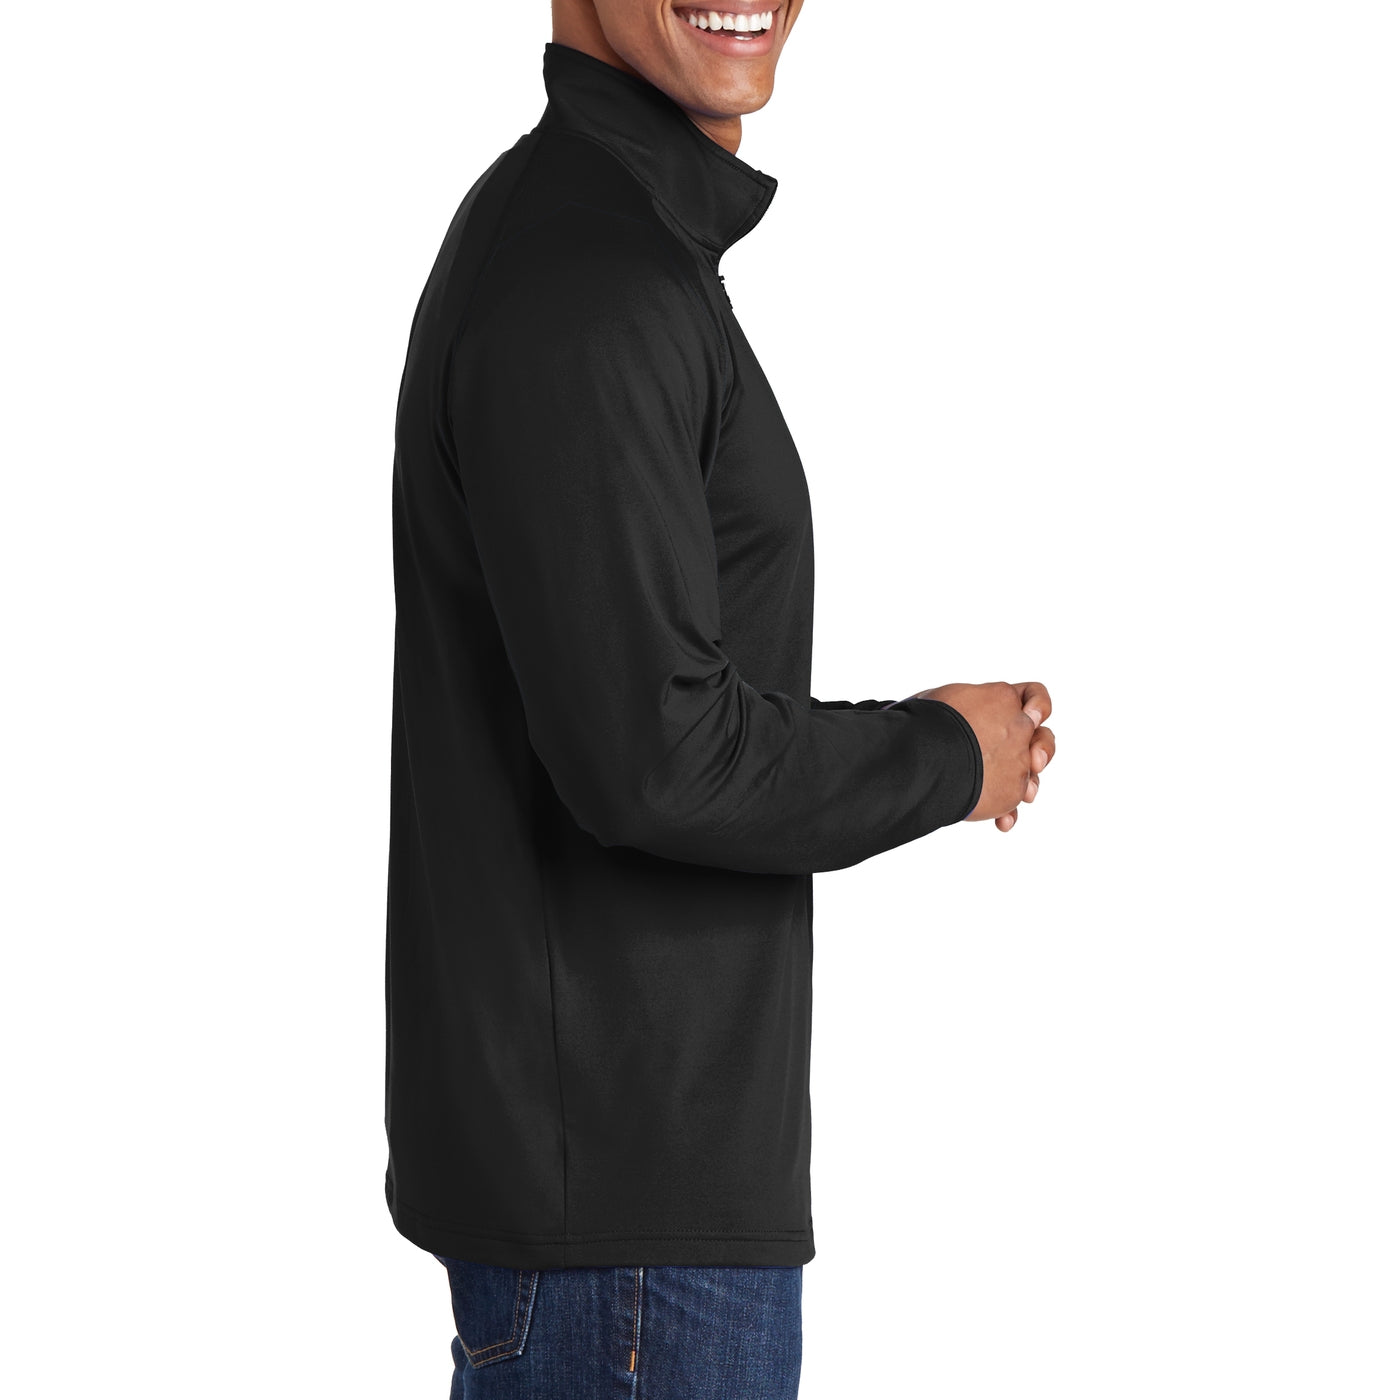 Men's Stretch 1/2 Zip Pullover - Black